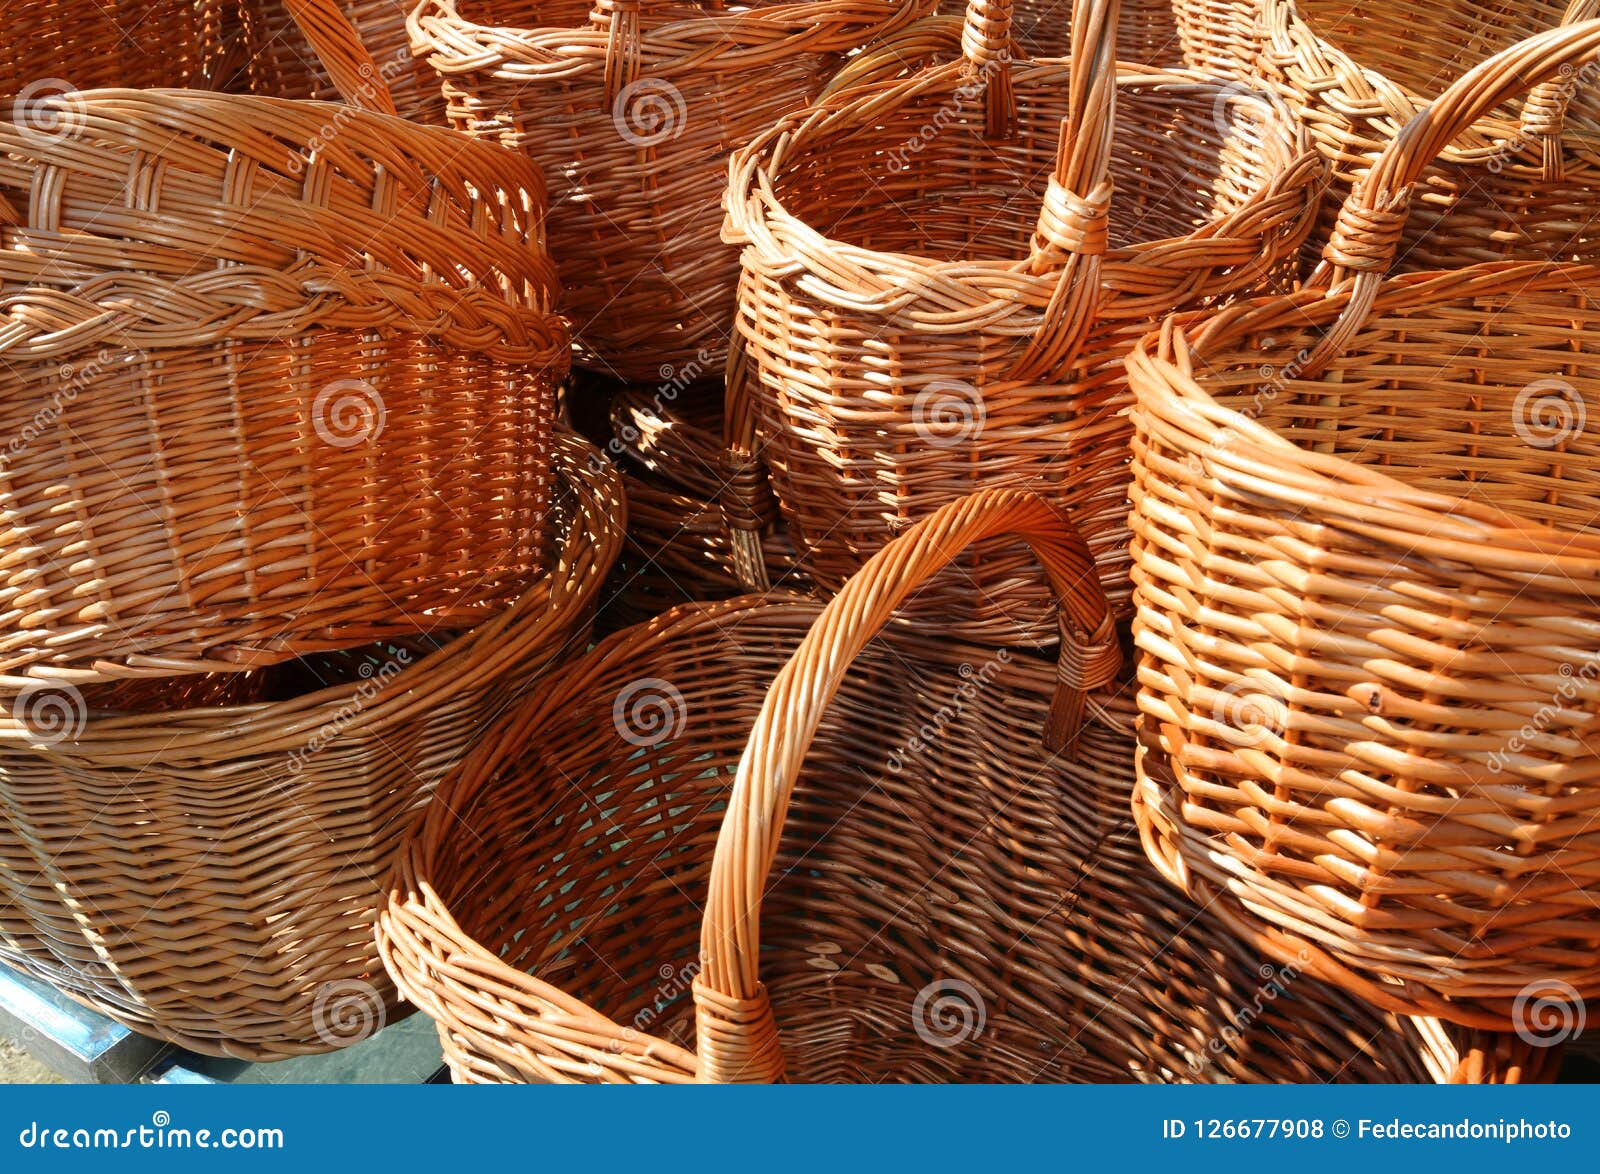 Many Baskets in Wicker Sale Stock Photo - Image of vimini, weaving: 126677908